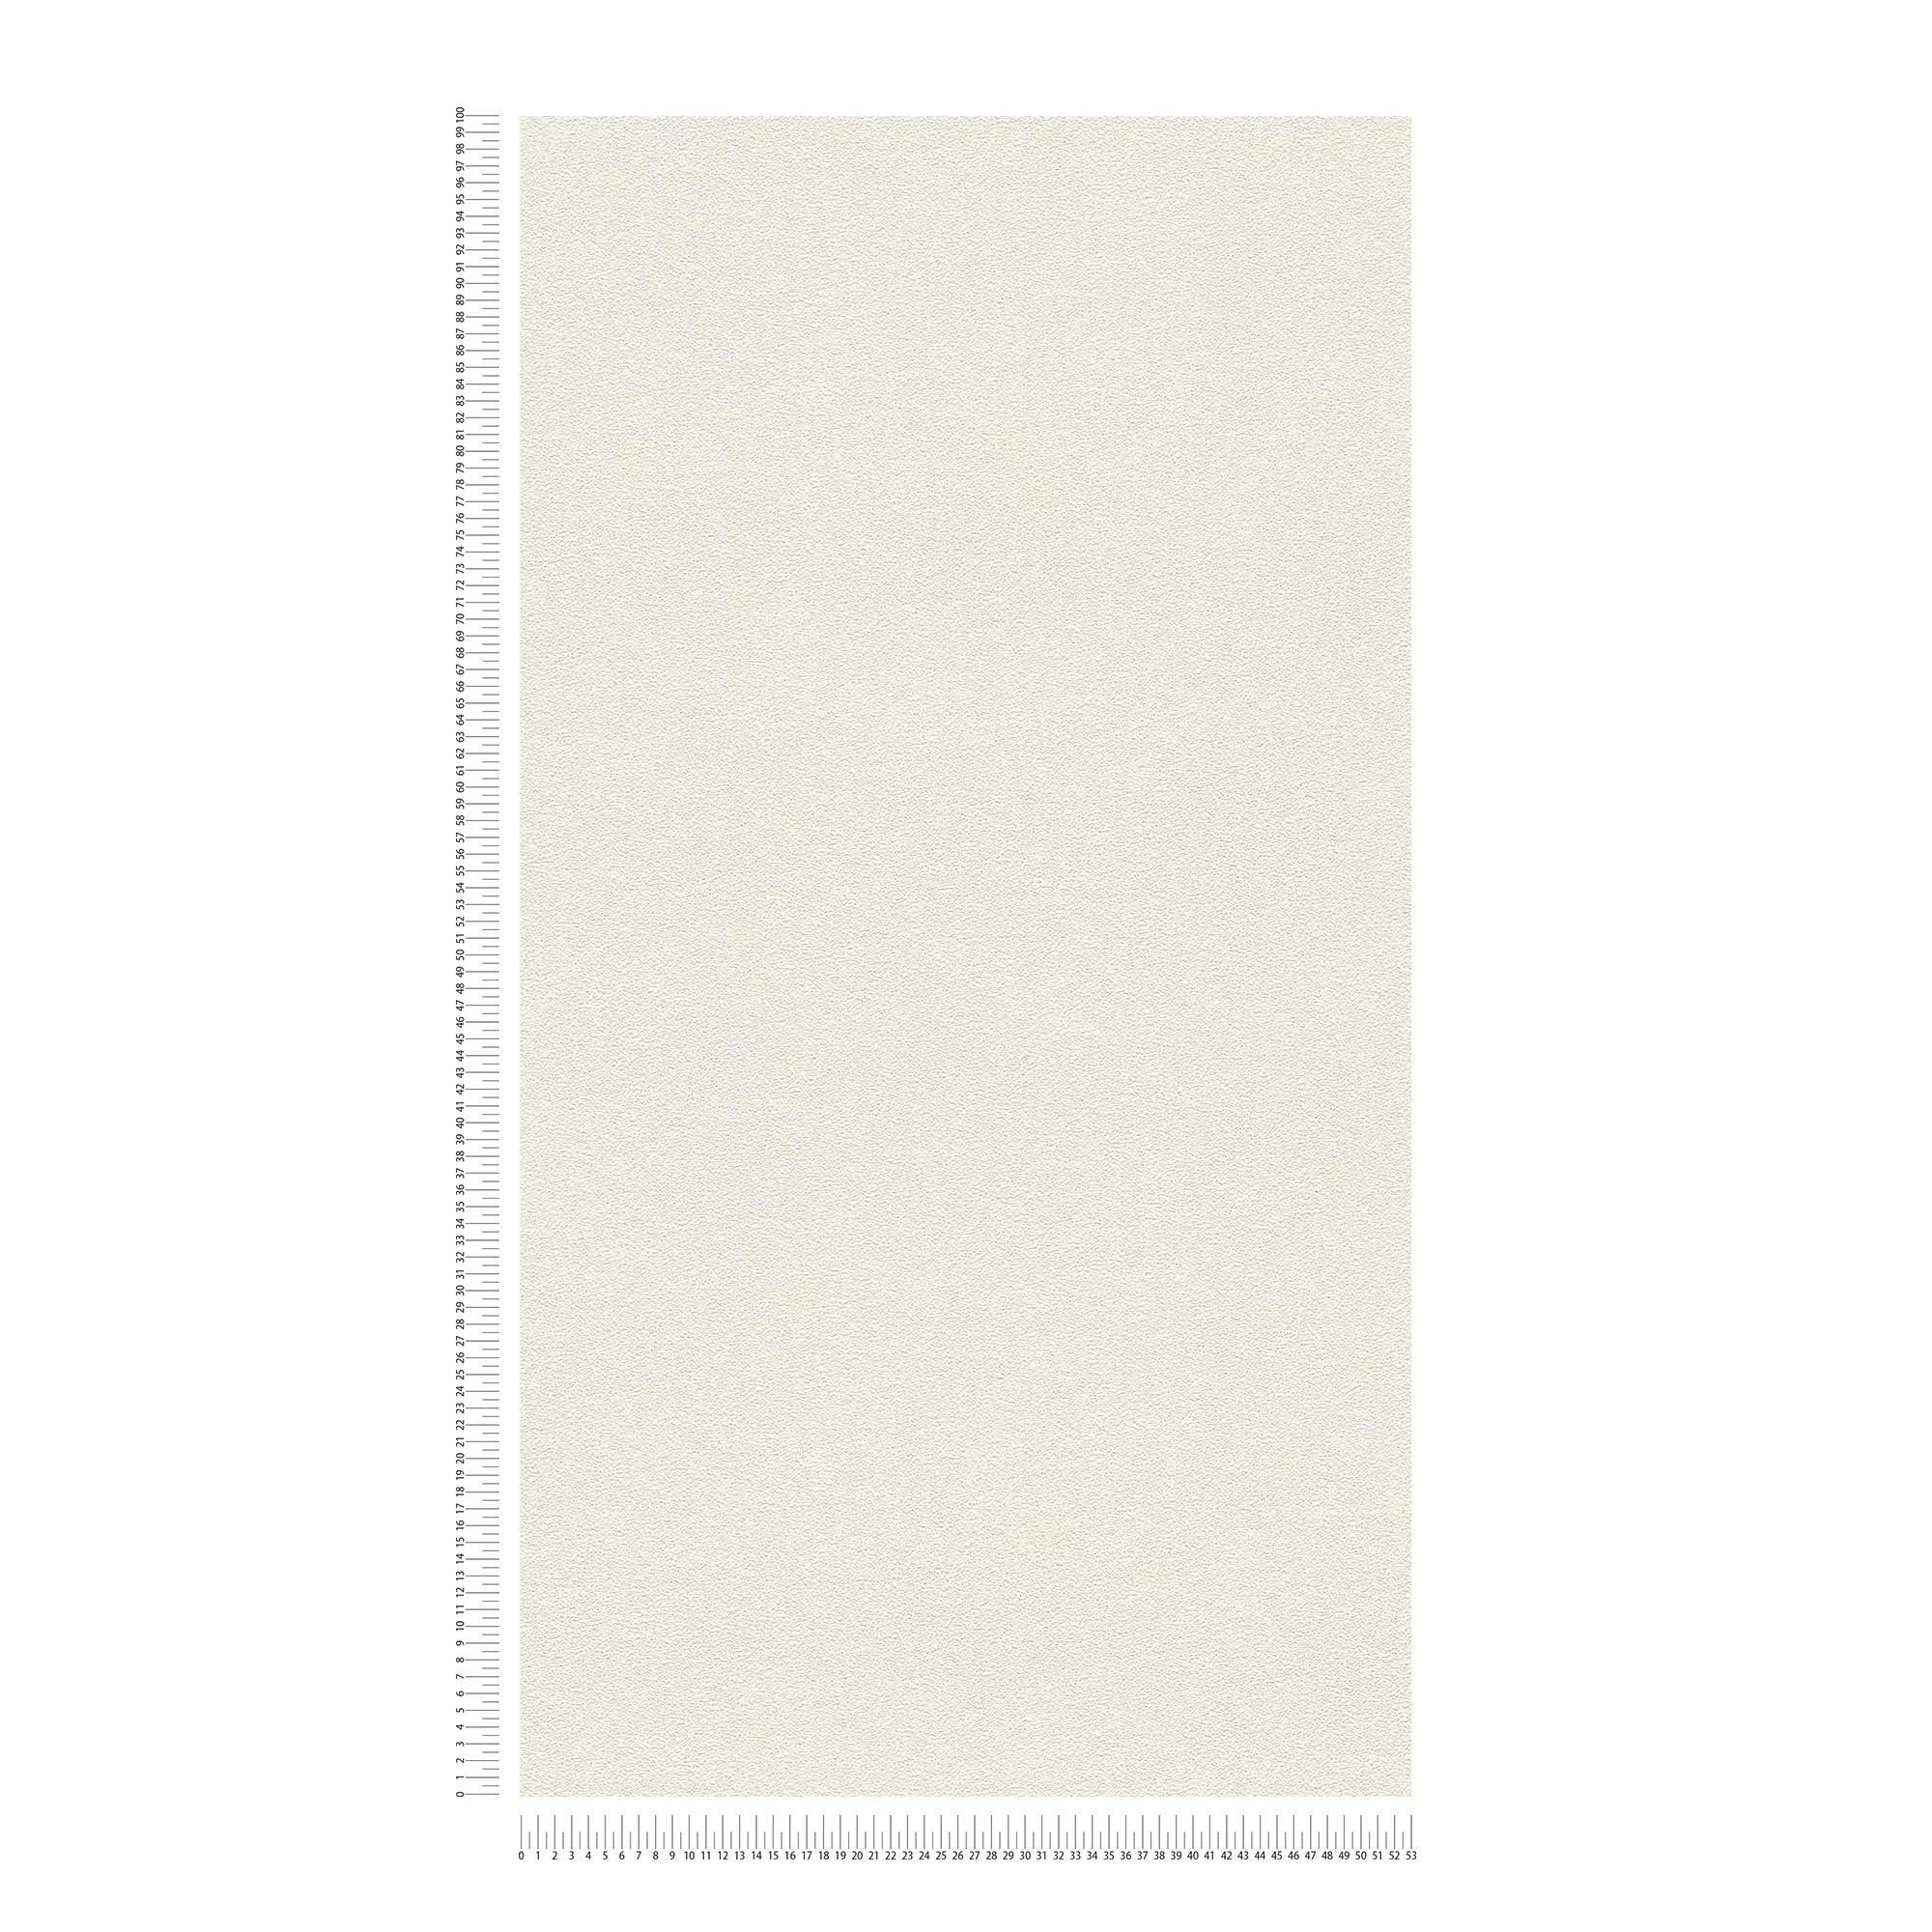             Papel pintado blanco con superficie texturizada con aspecto de yeso fino
        